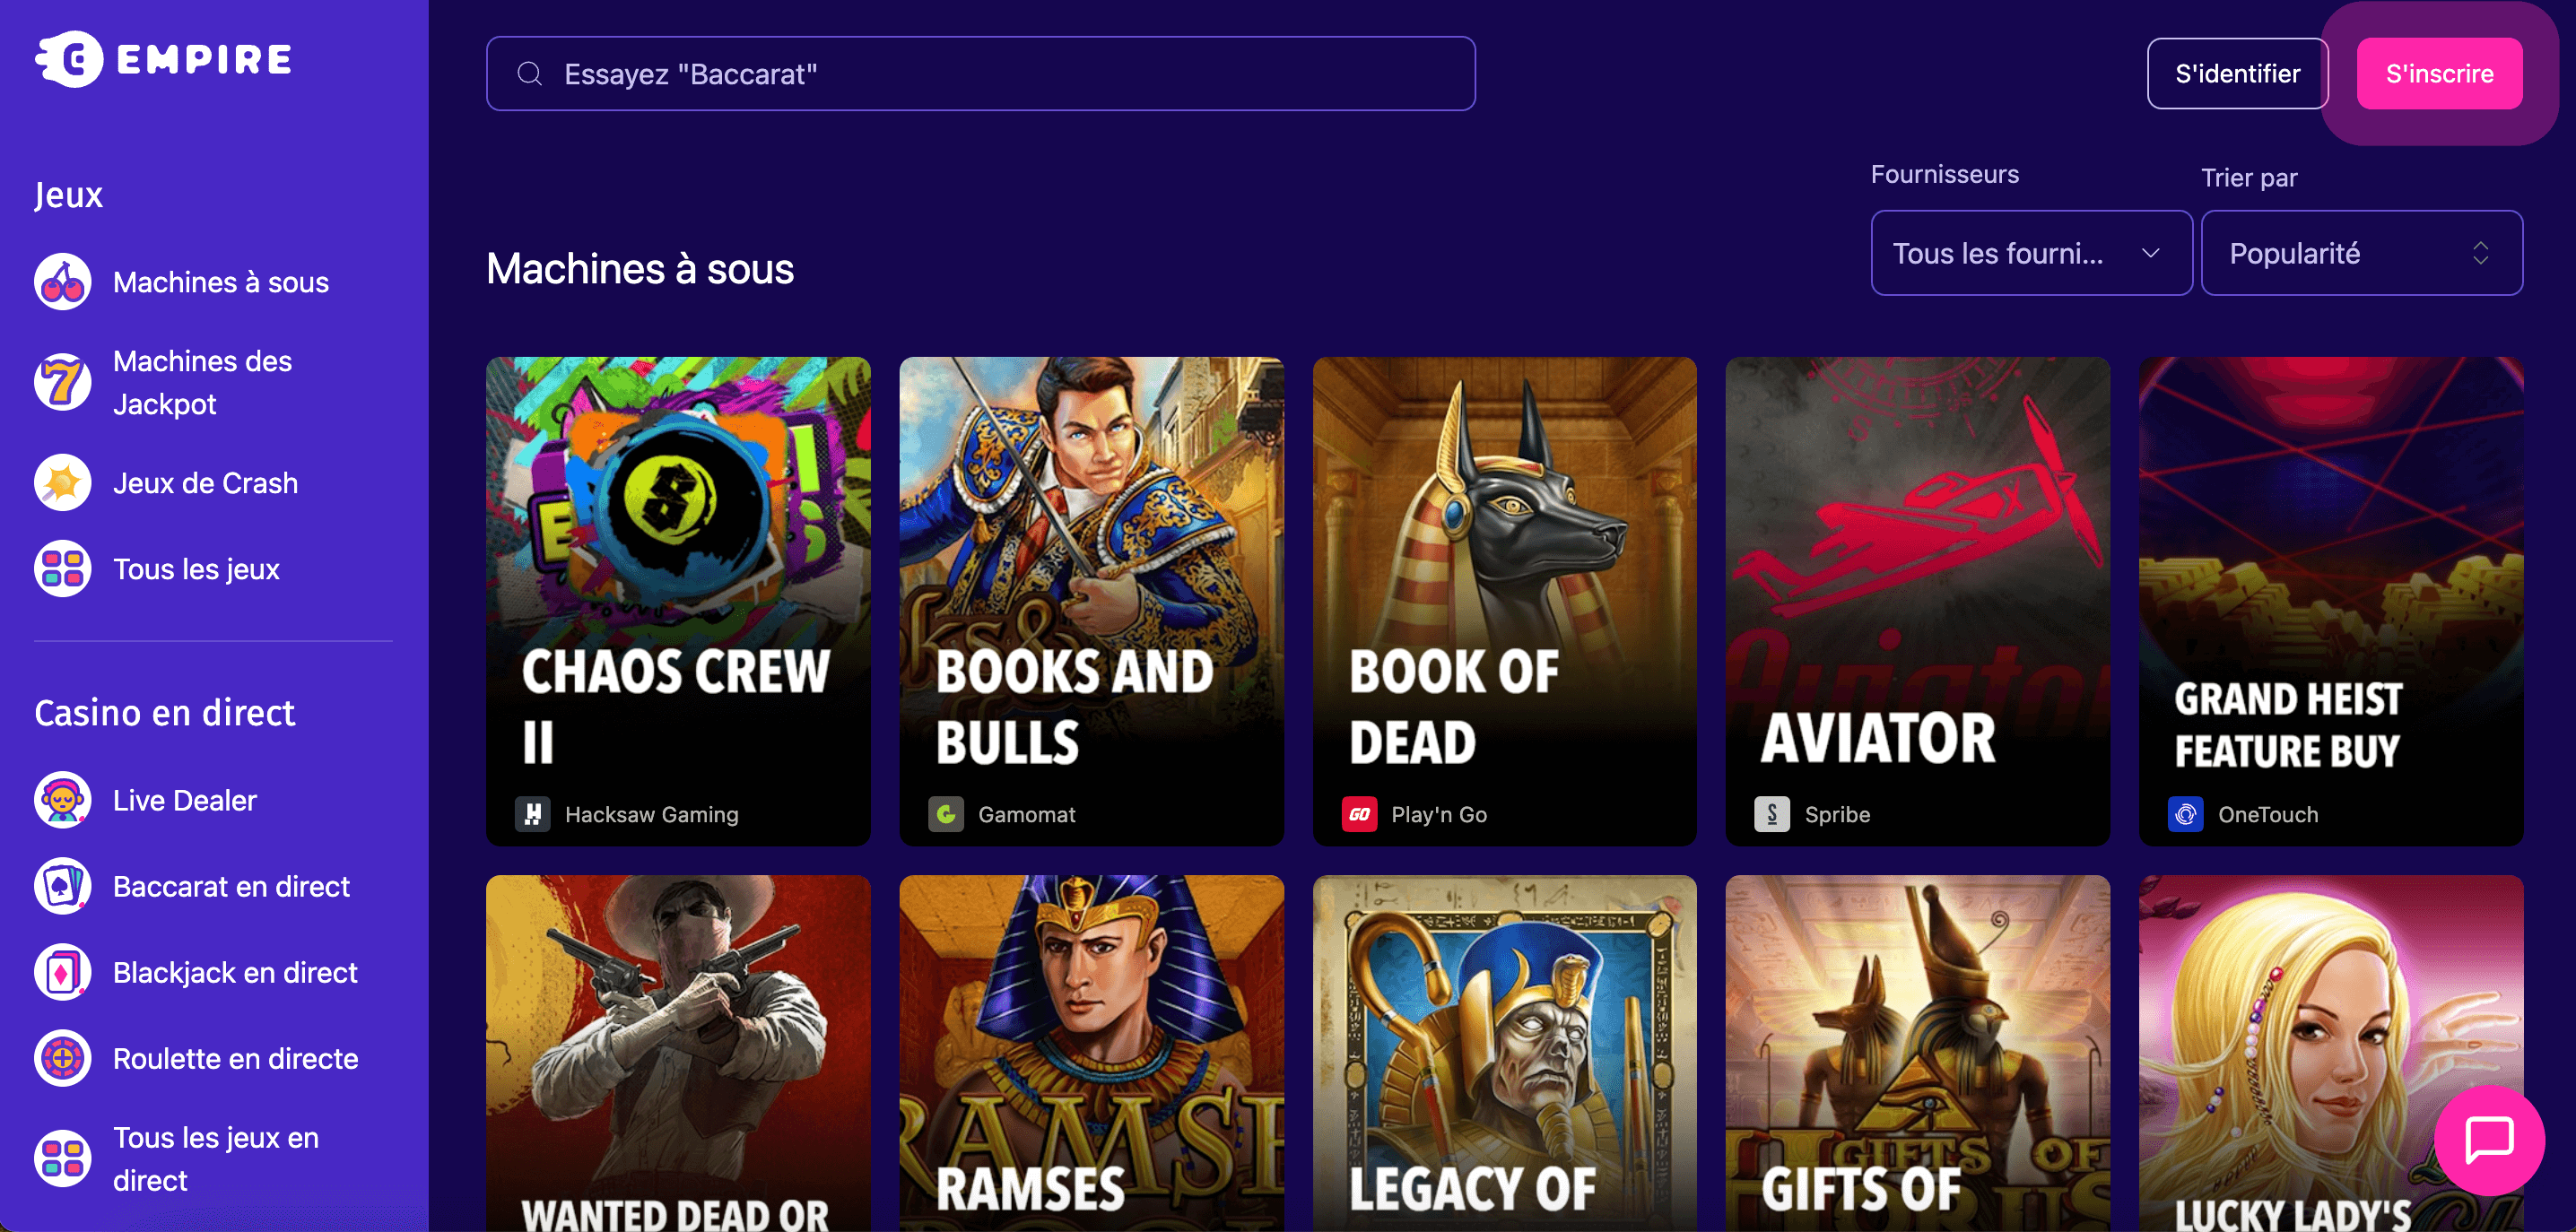 Empire casino homepage